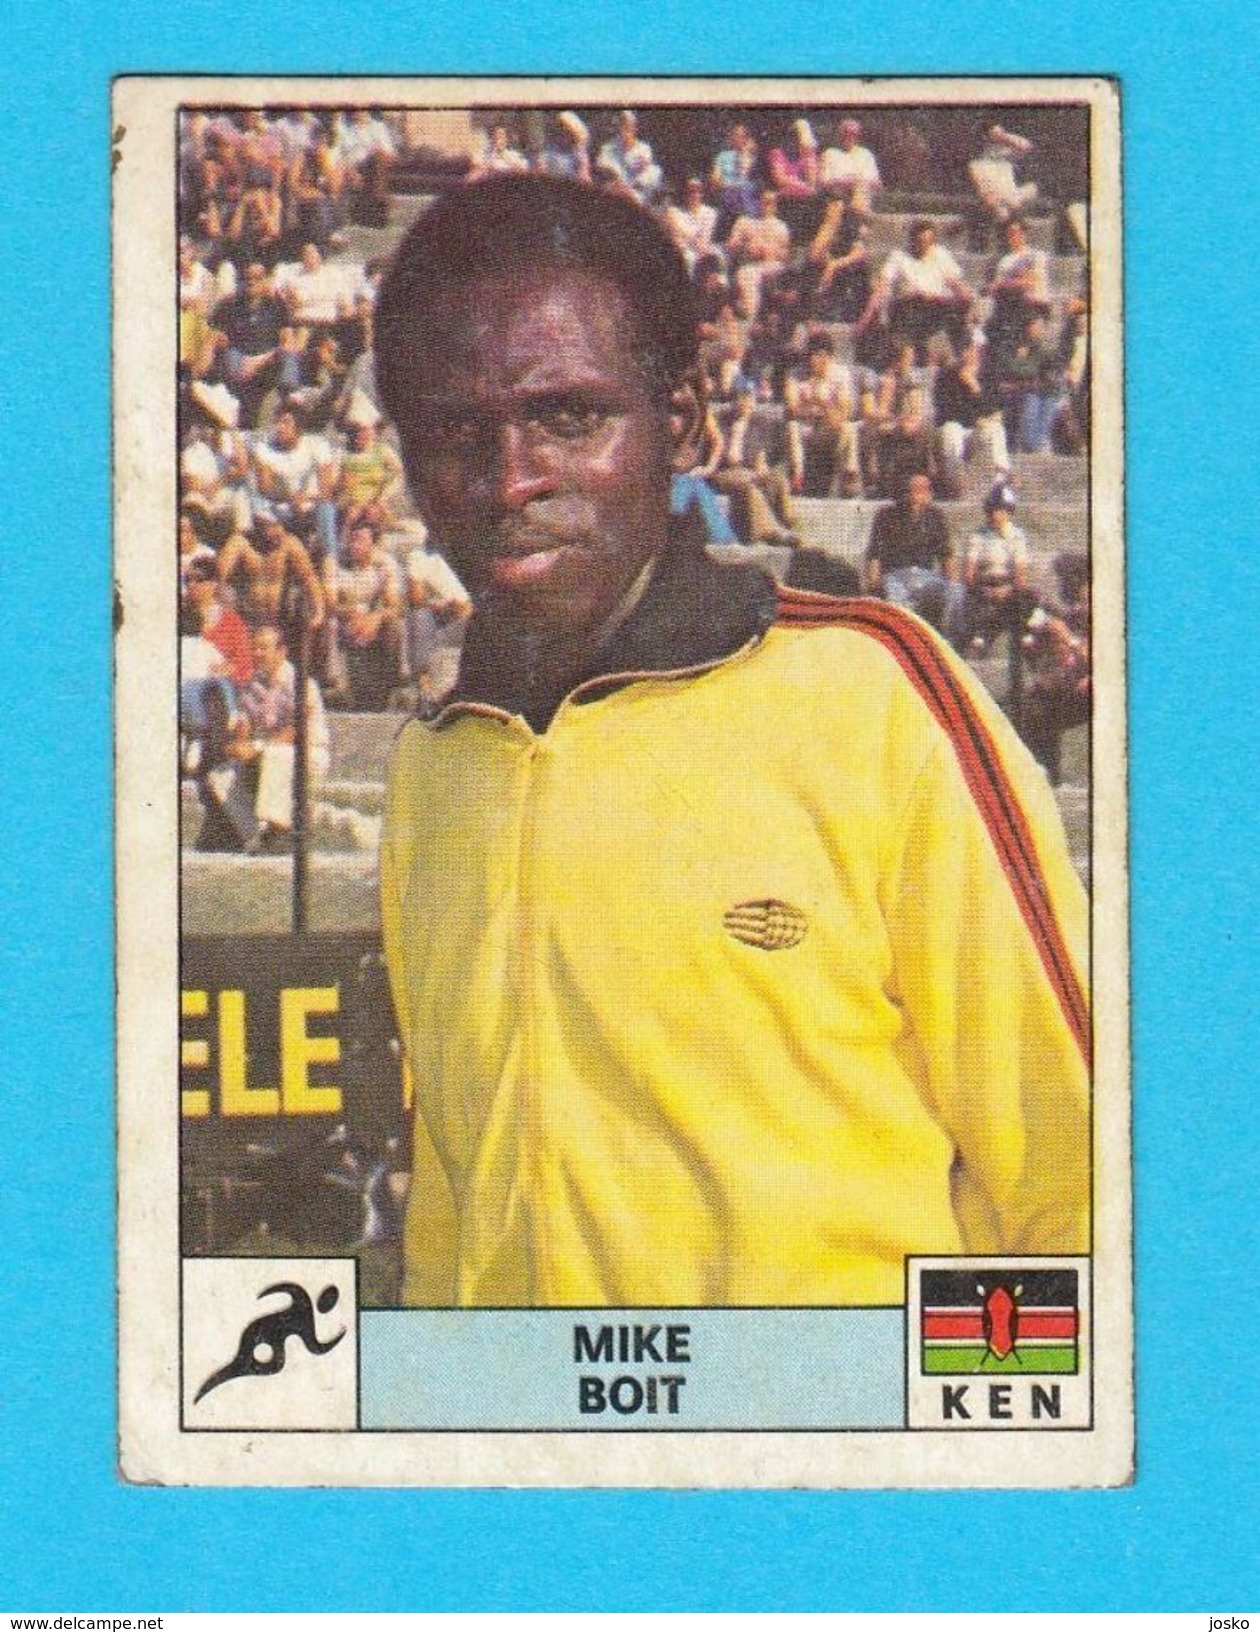 PANINI OLYMPIC GAMES MONTREAL 76 (Yugoslav Edition) - No. 106. MIKE BOIT Athletics Kenia Juex Olympiques 1976 - Athlétisme